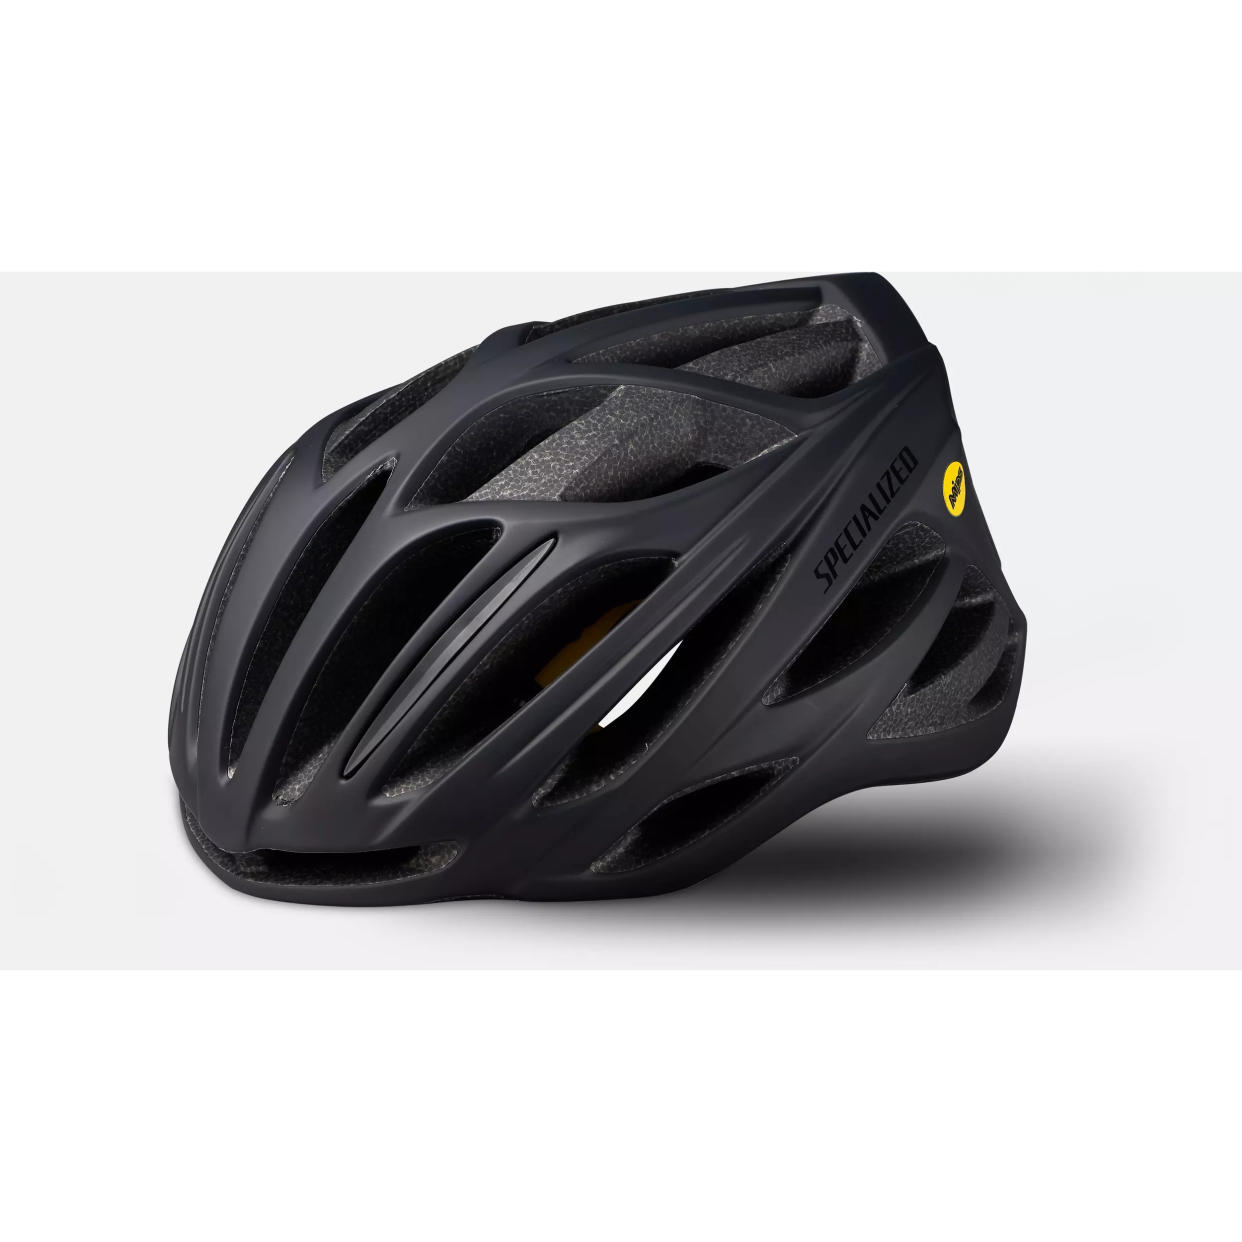 Specialized echelon III bike helmet